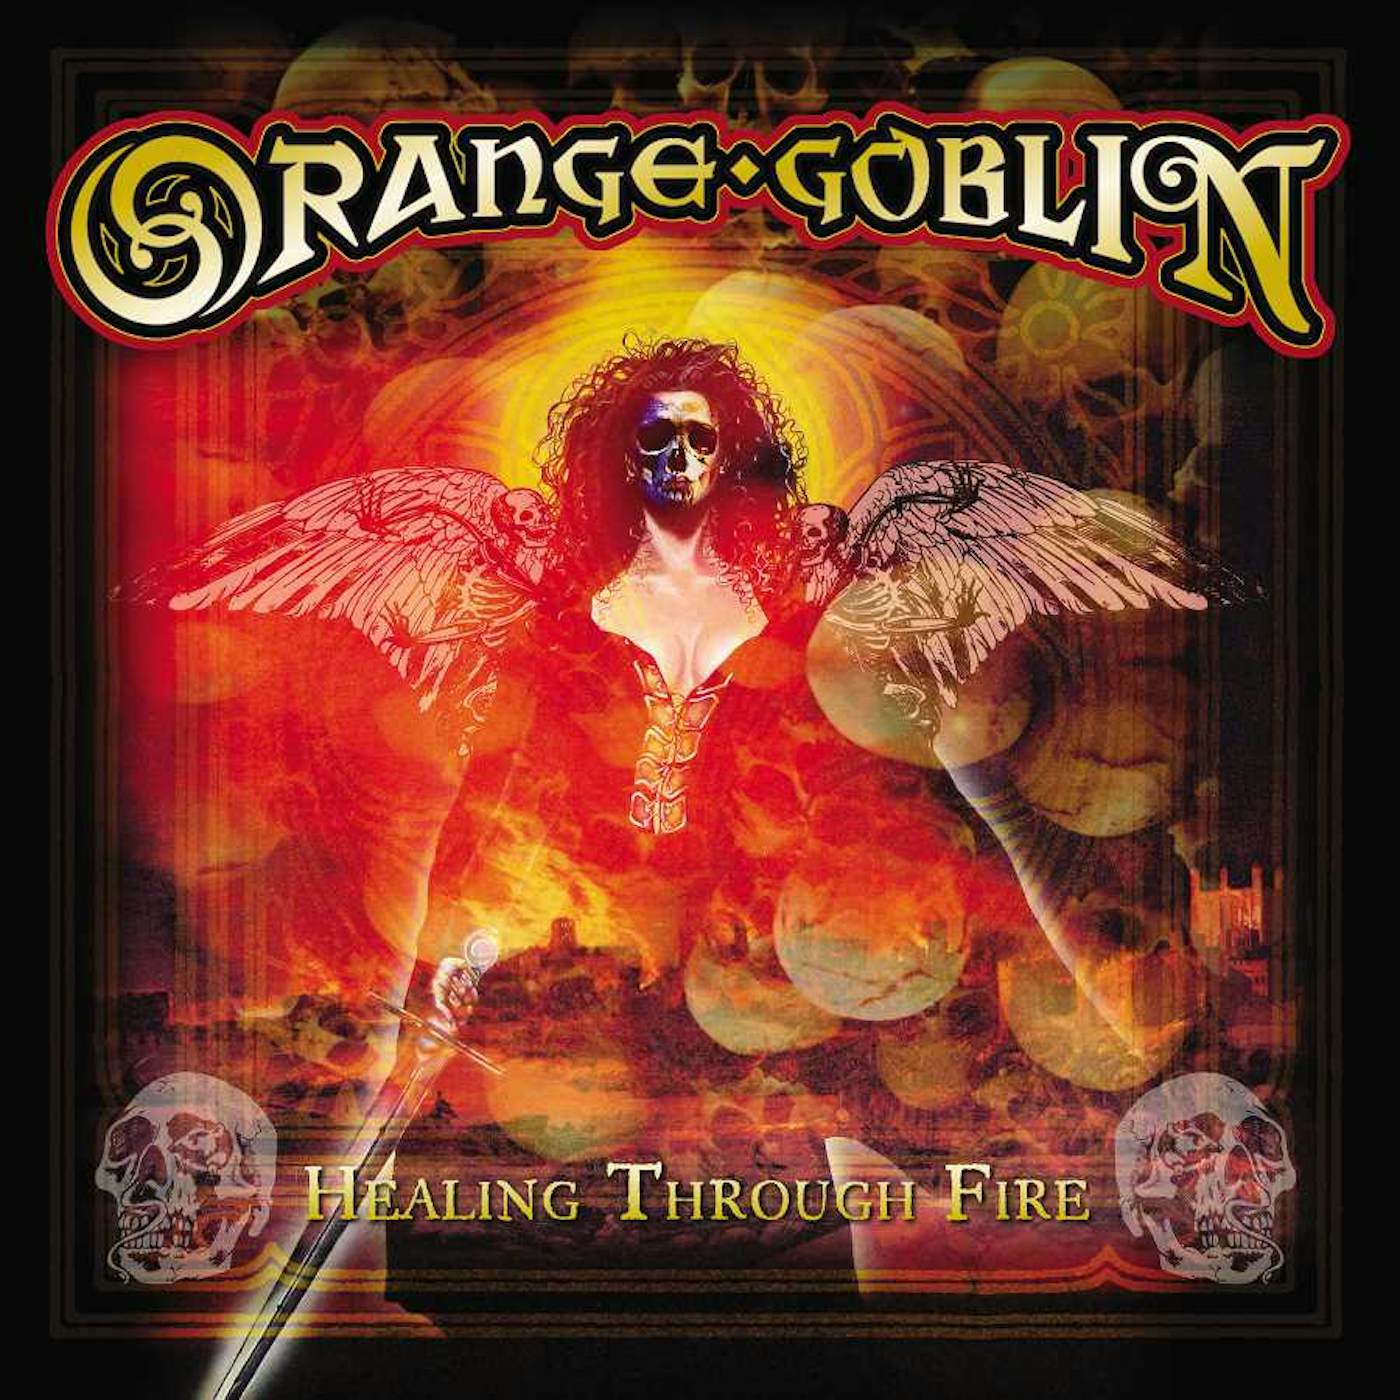 Orange Goblin Healing Through Fire CD